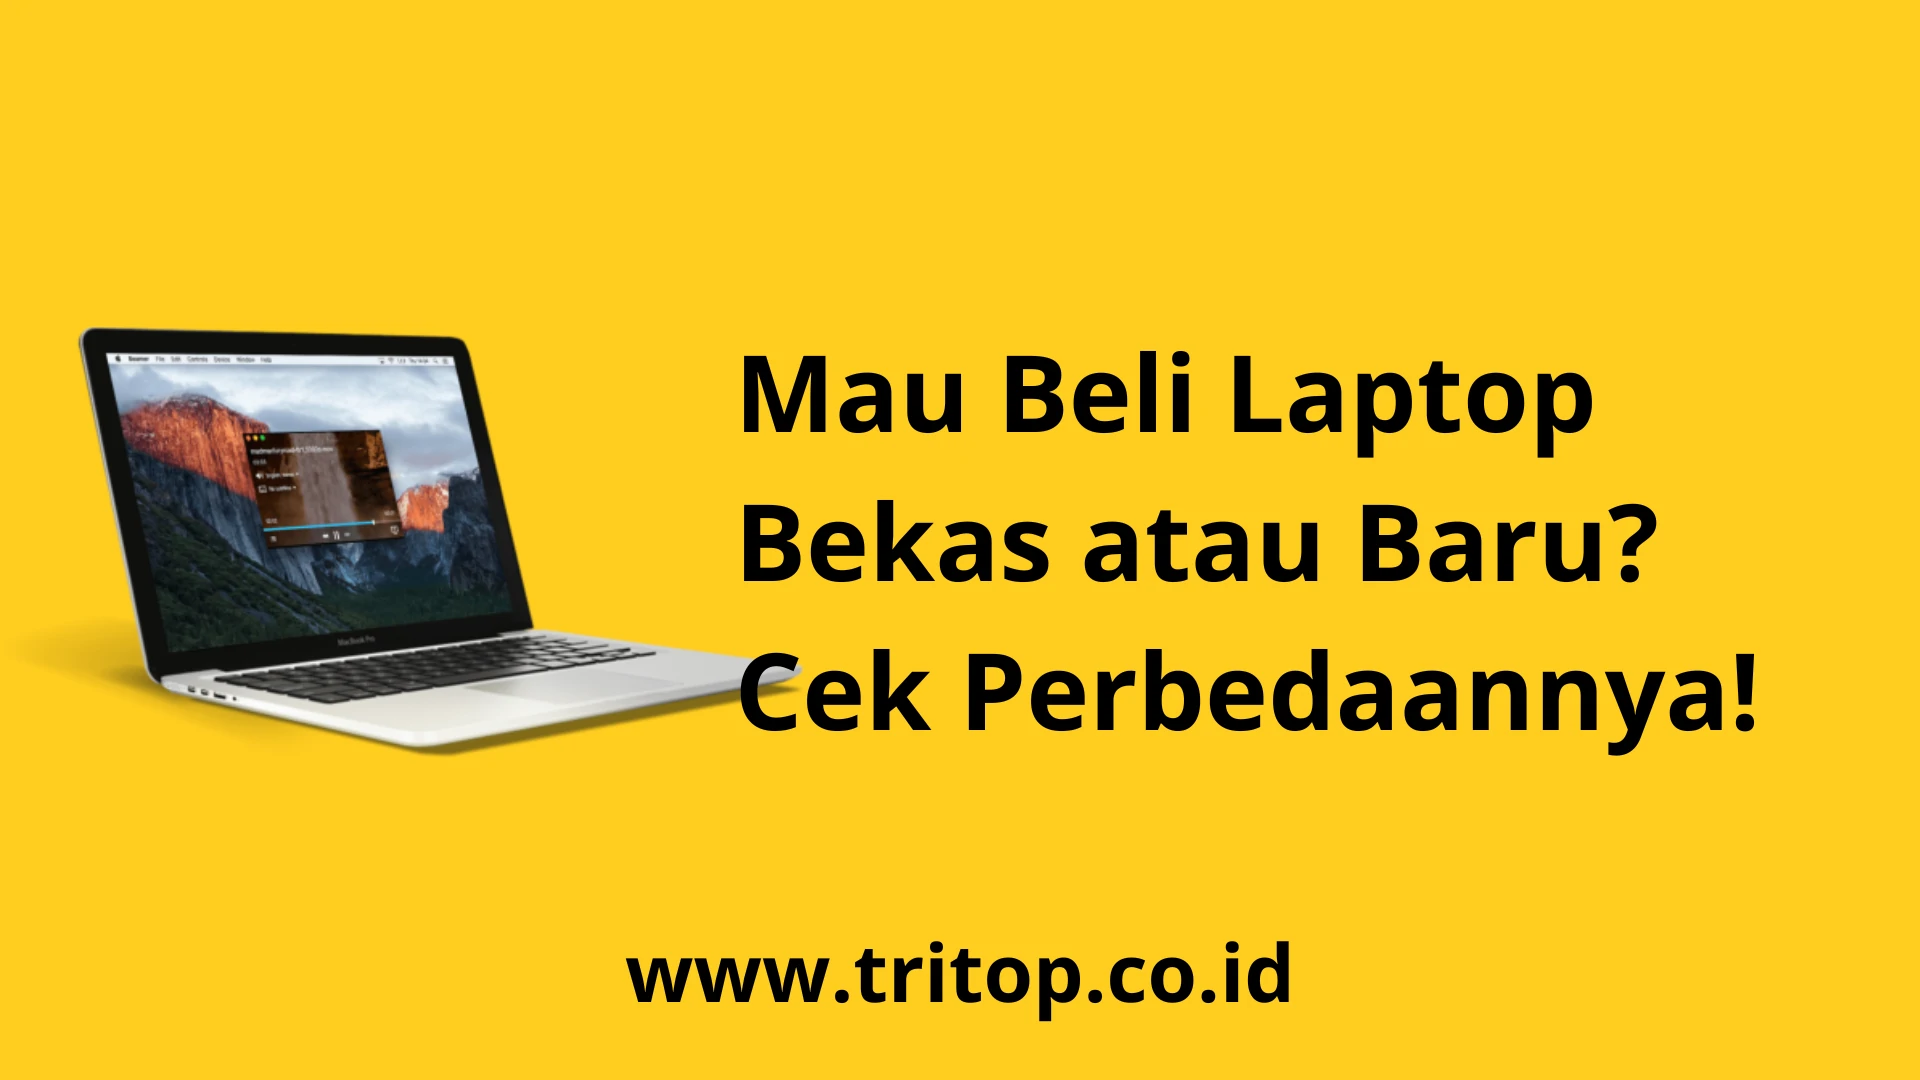 Beli Laptop Bekas atau Baru www.tritop.co.id